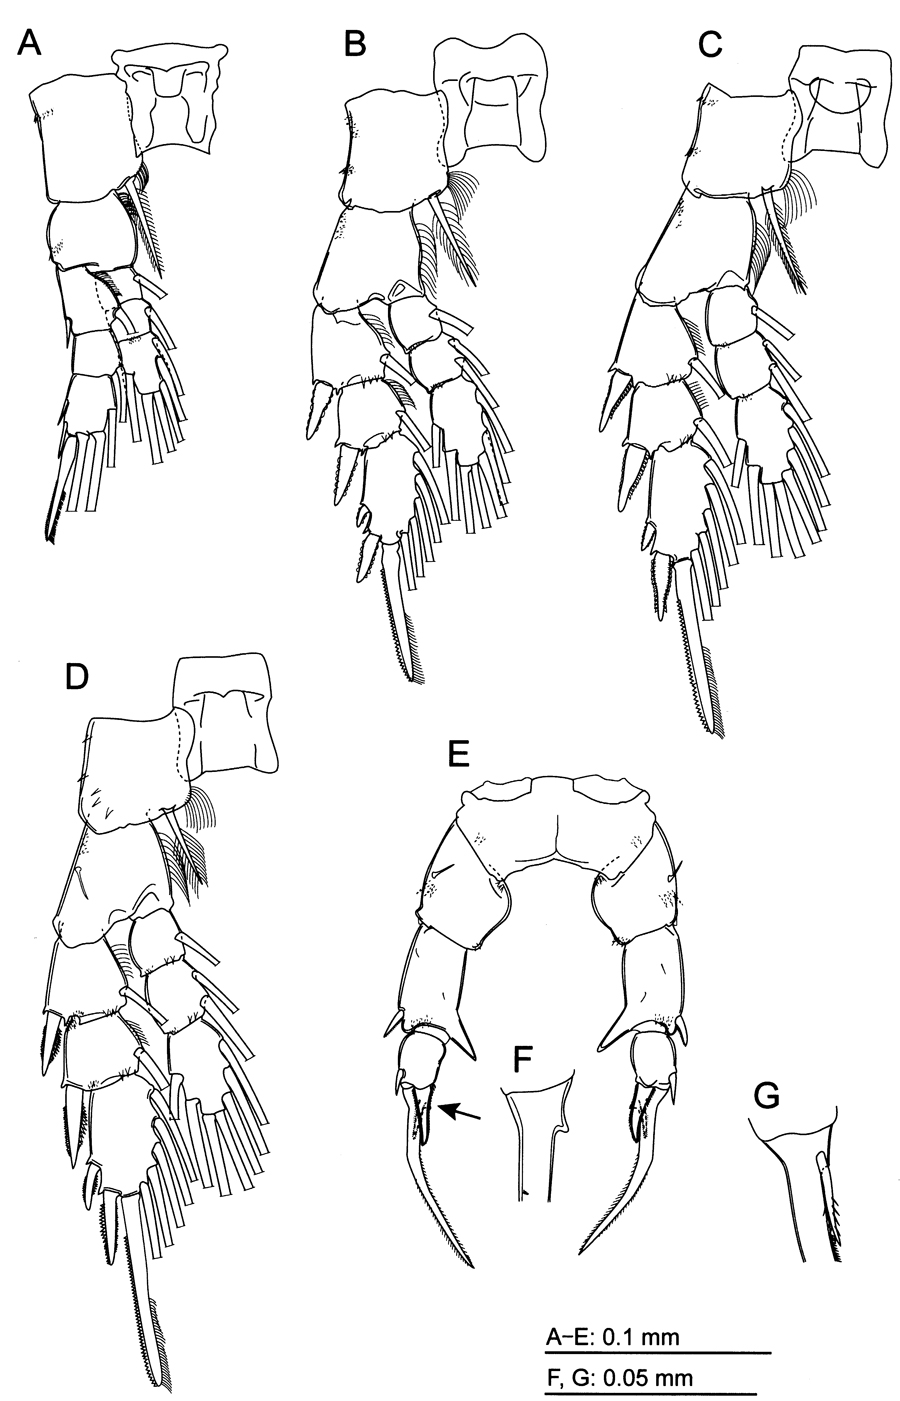 Species Pseudodiaptomus nansei - Plate 3 of morphological figures